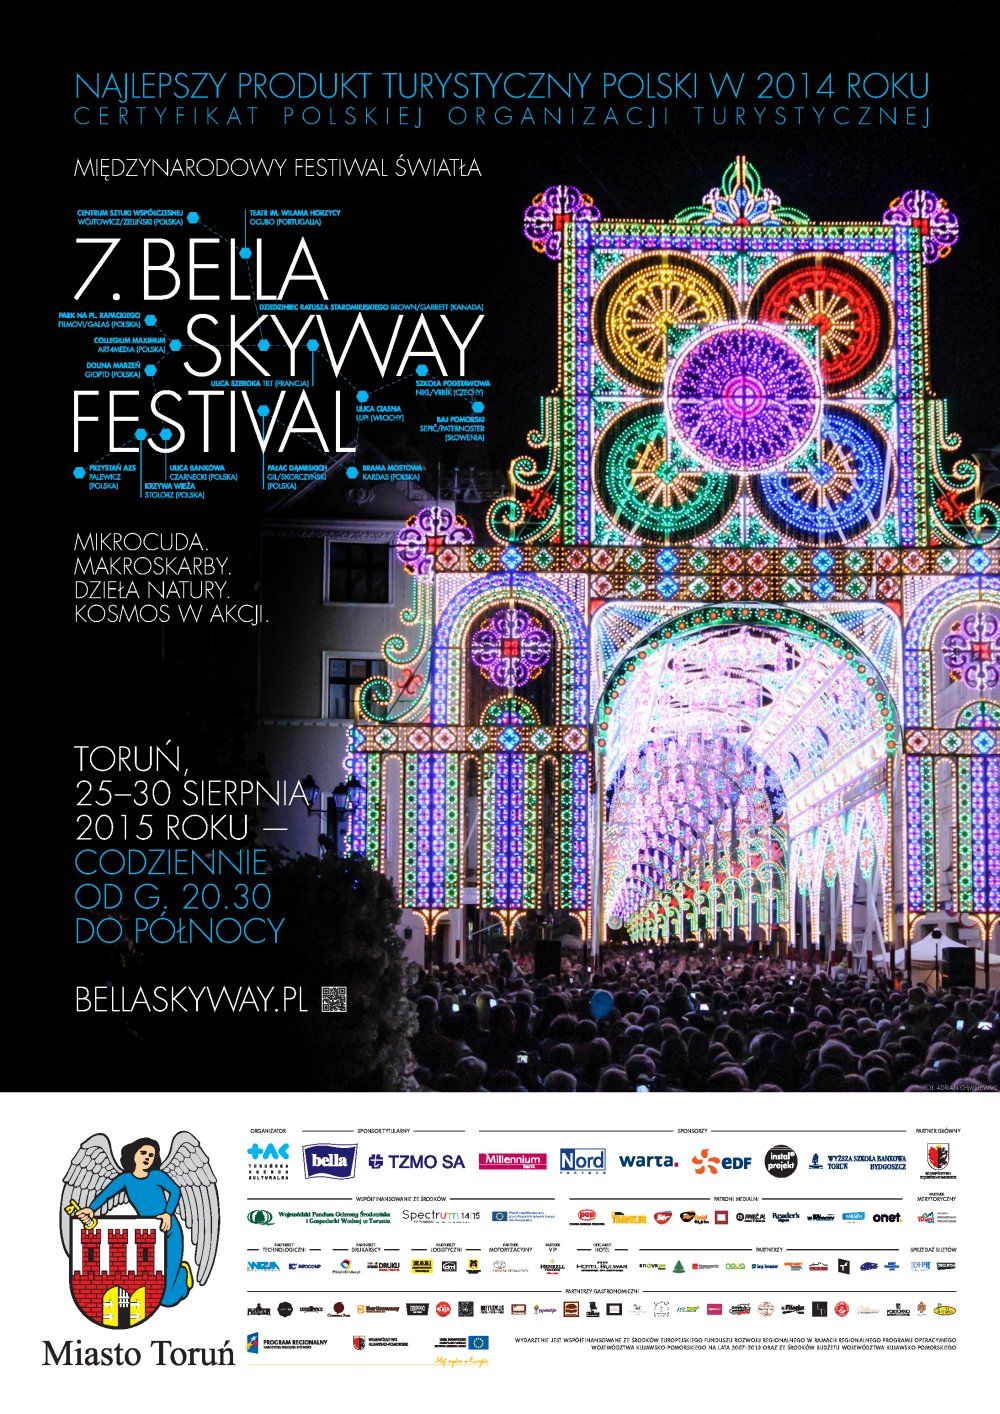 Bella Skyway Festival